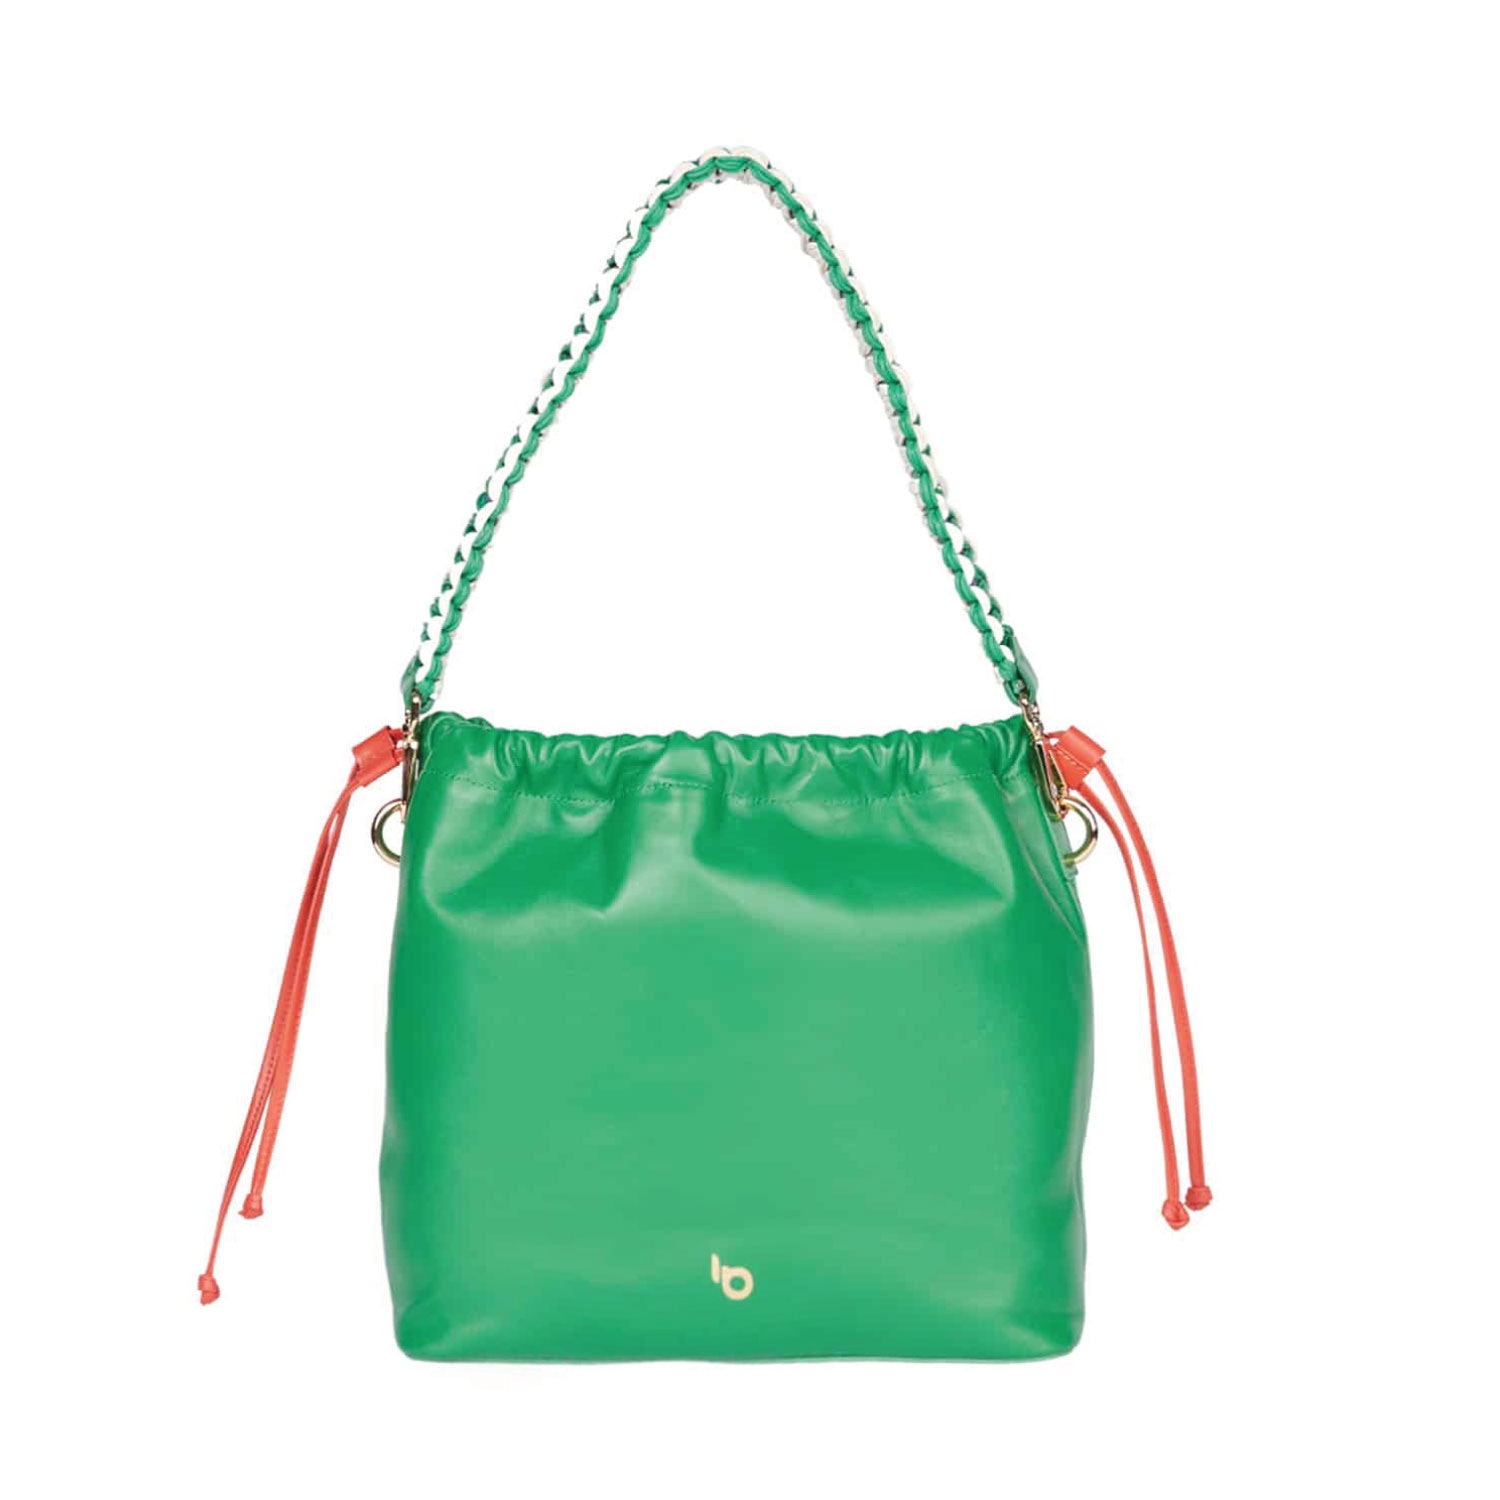 Allbyb Women's Mira Green Shoulder Bag